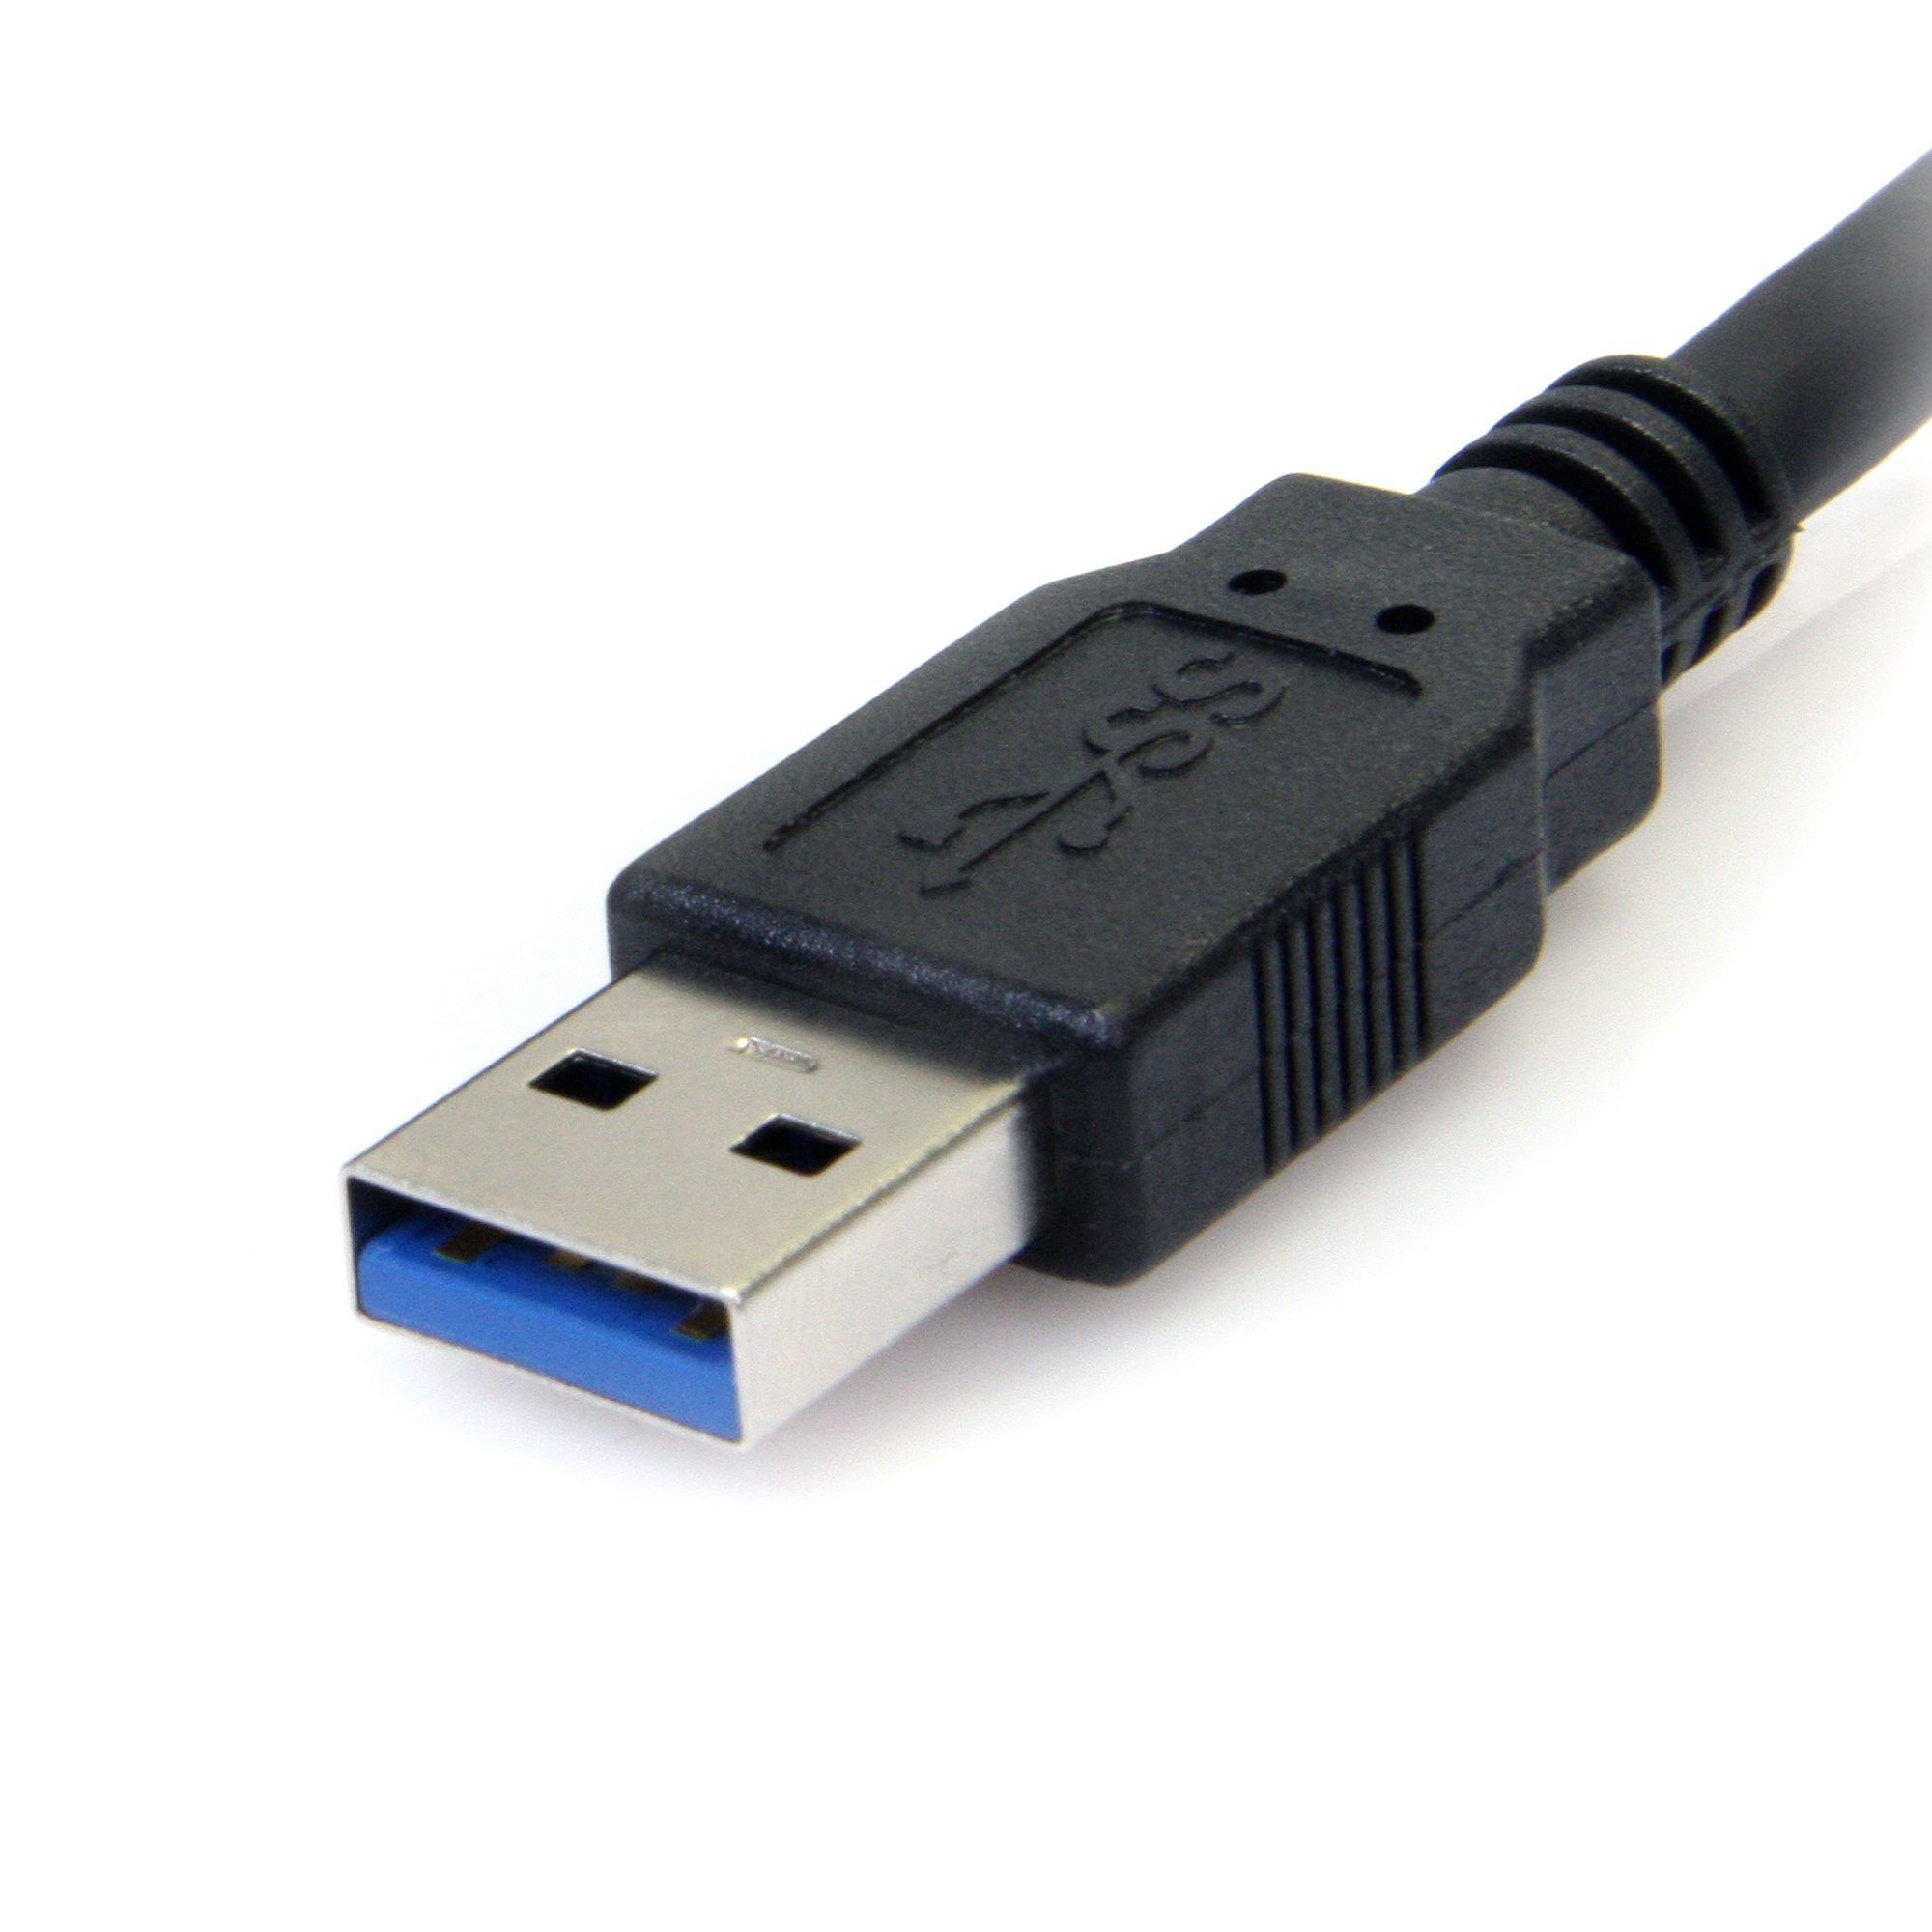 Usb 3.0 кабель питанием. Кабель USB 3.0 SUPERSPEED USB 3.0. USB 3.0 Type b(m) угловой. USB 3.0 Cable Micro-b винт. Кабель USB 3.0 Micro USB 90 градусов.